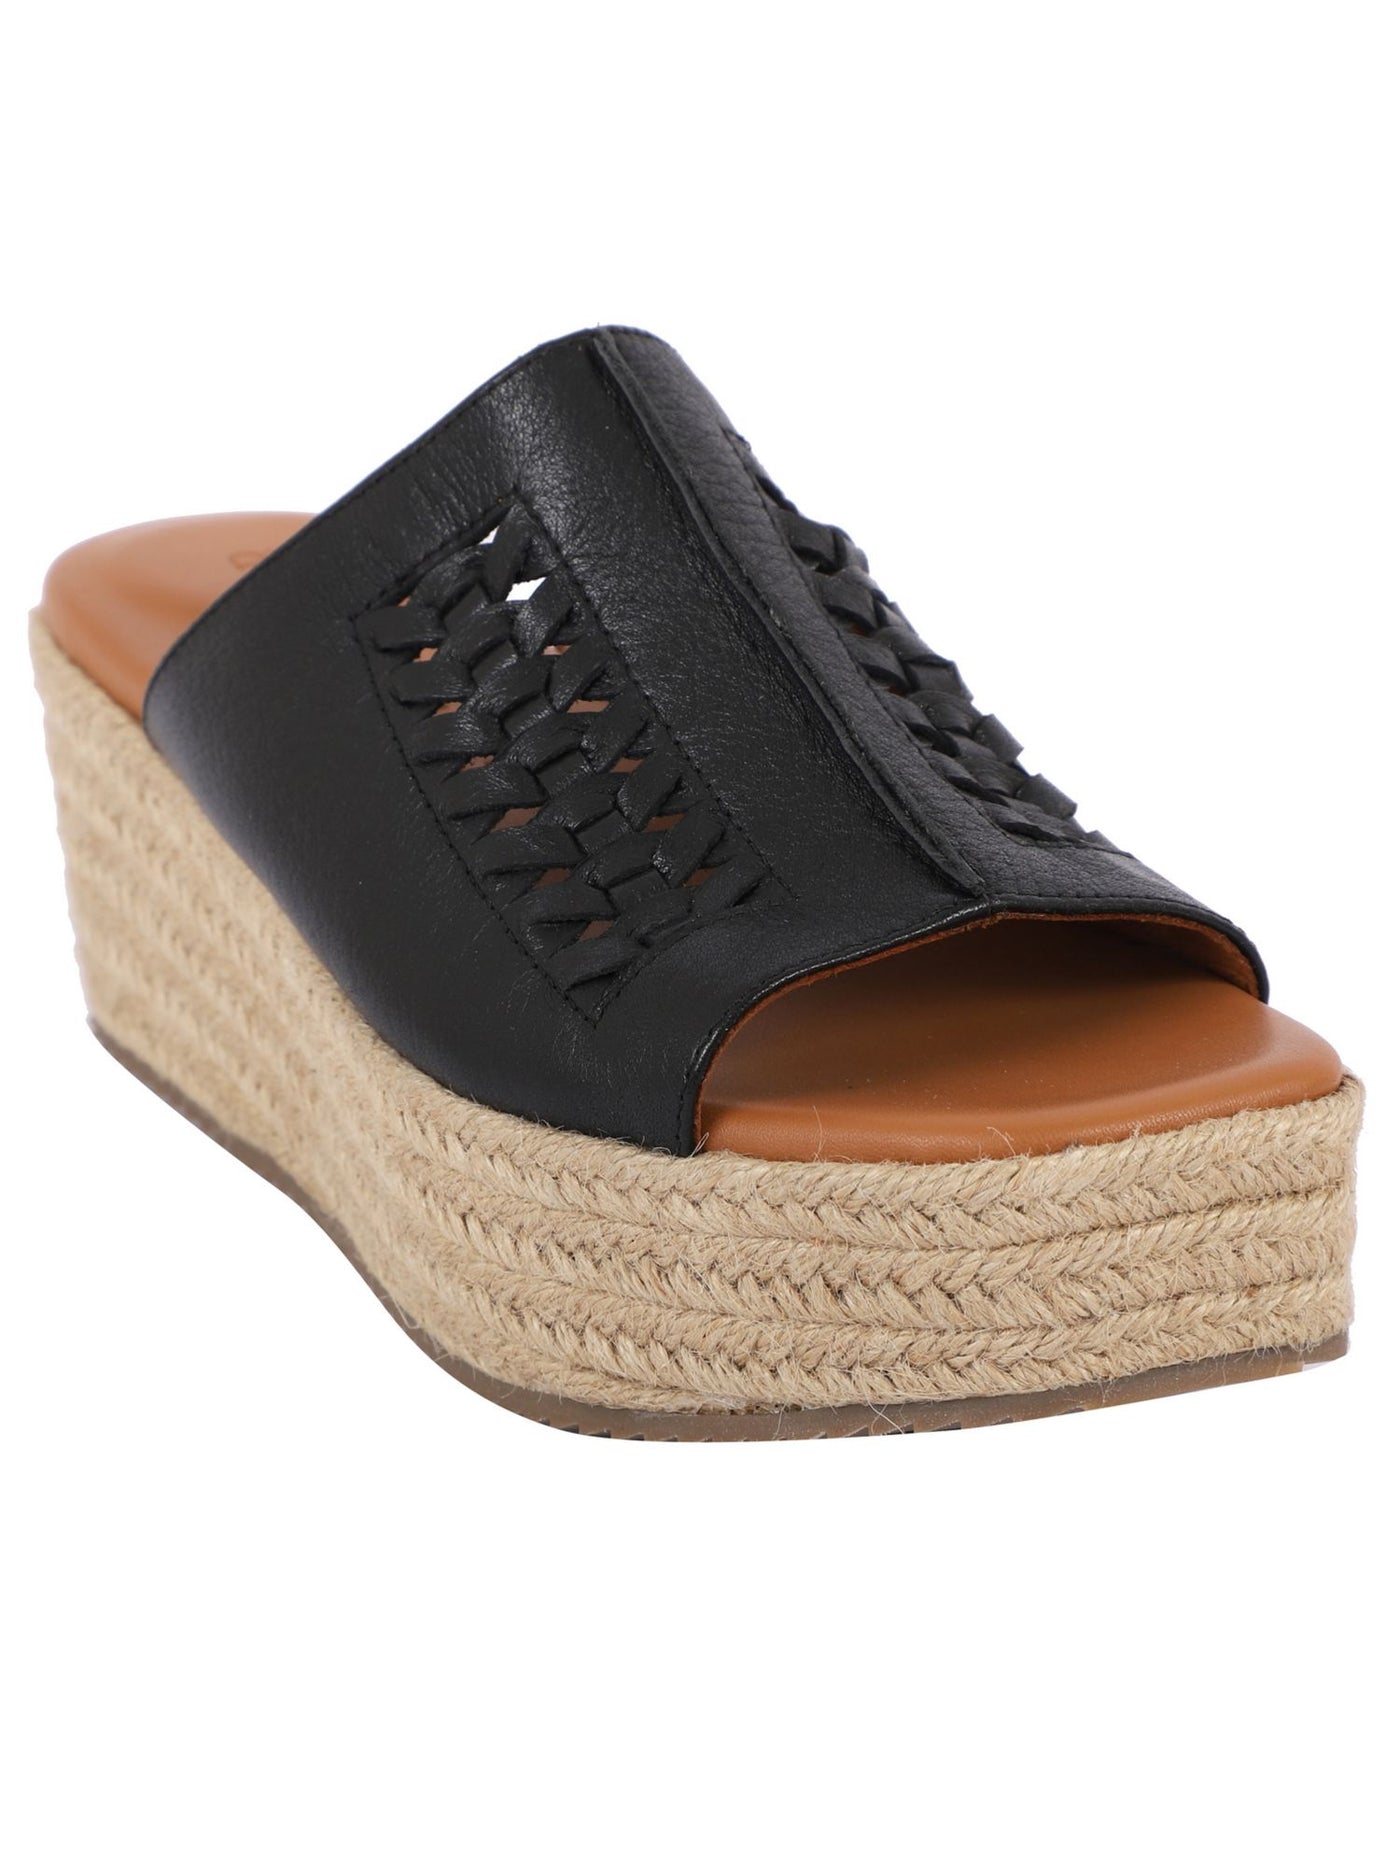 GENTLE SOULS KENNETH COLE Womens Black Goring Padded Braided Silvana Square Toe Platform Slip On Leather Espadrille Shoes 9 M